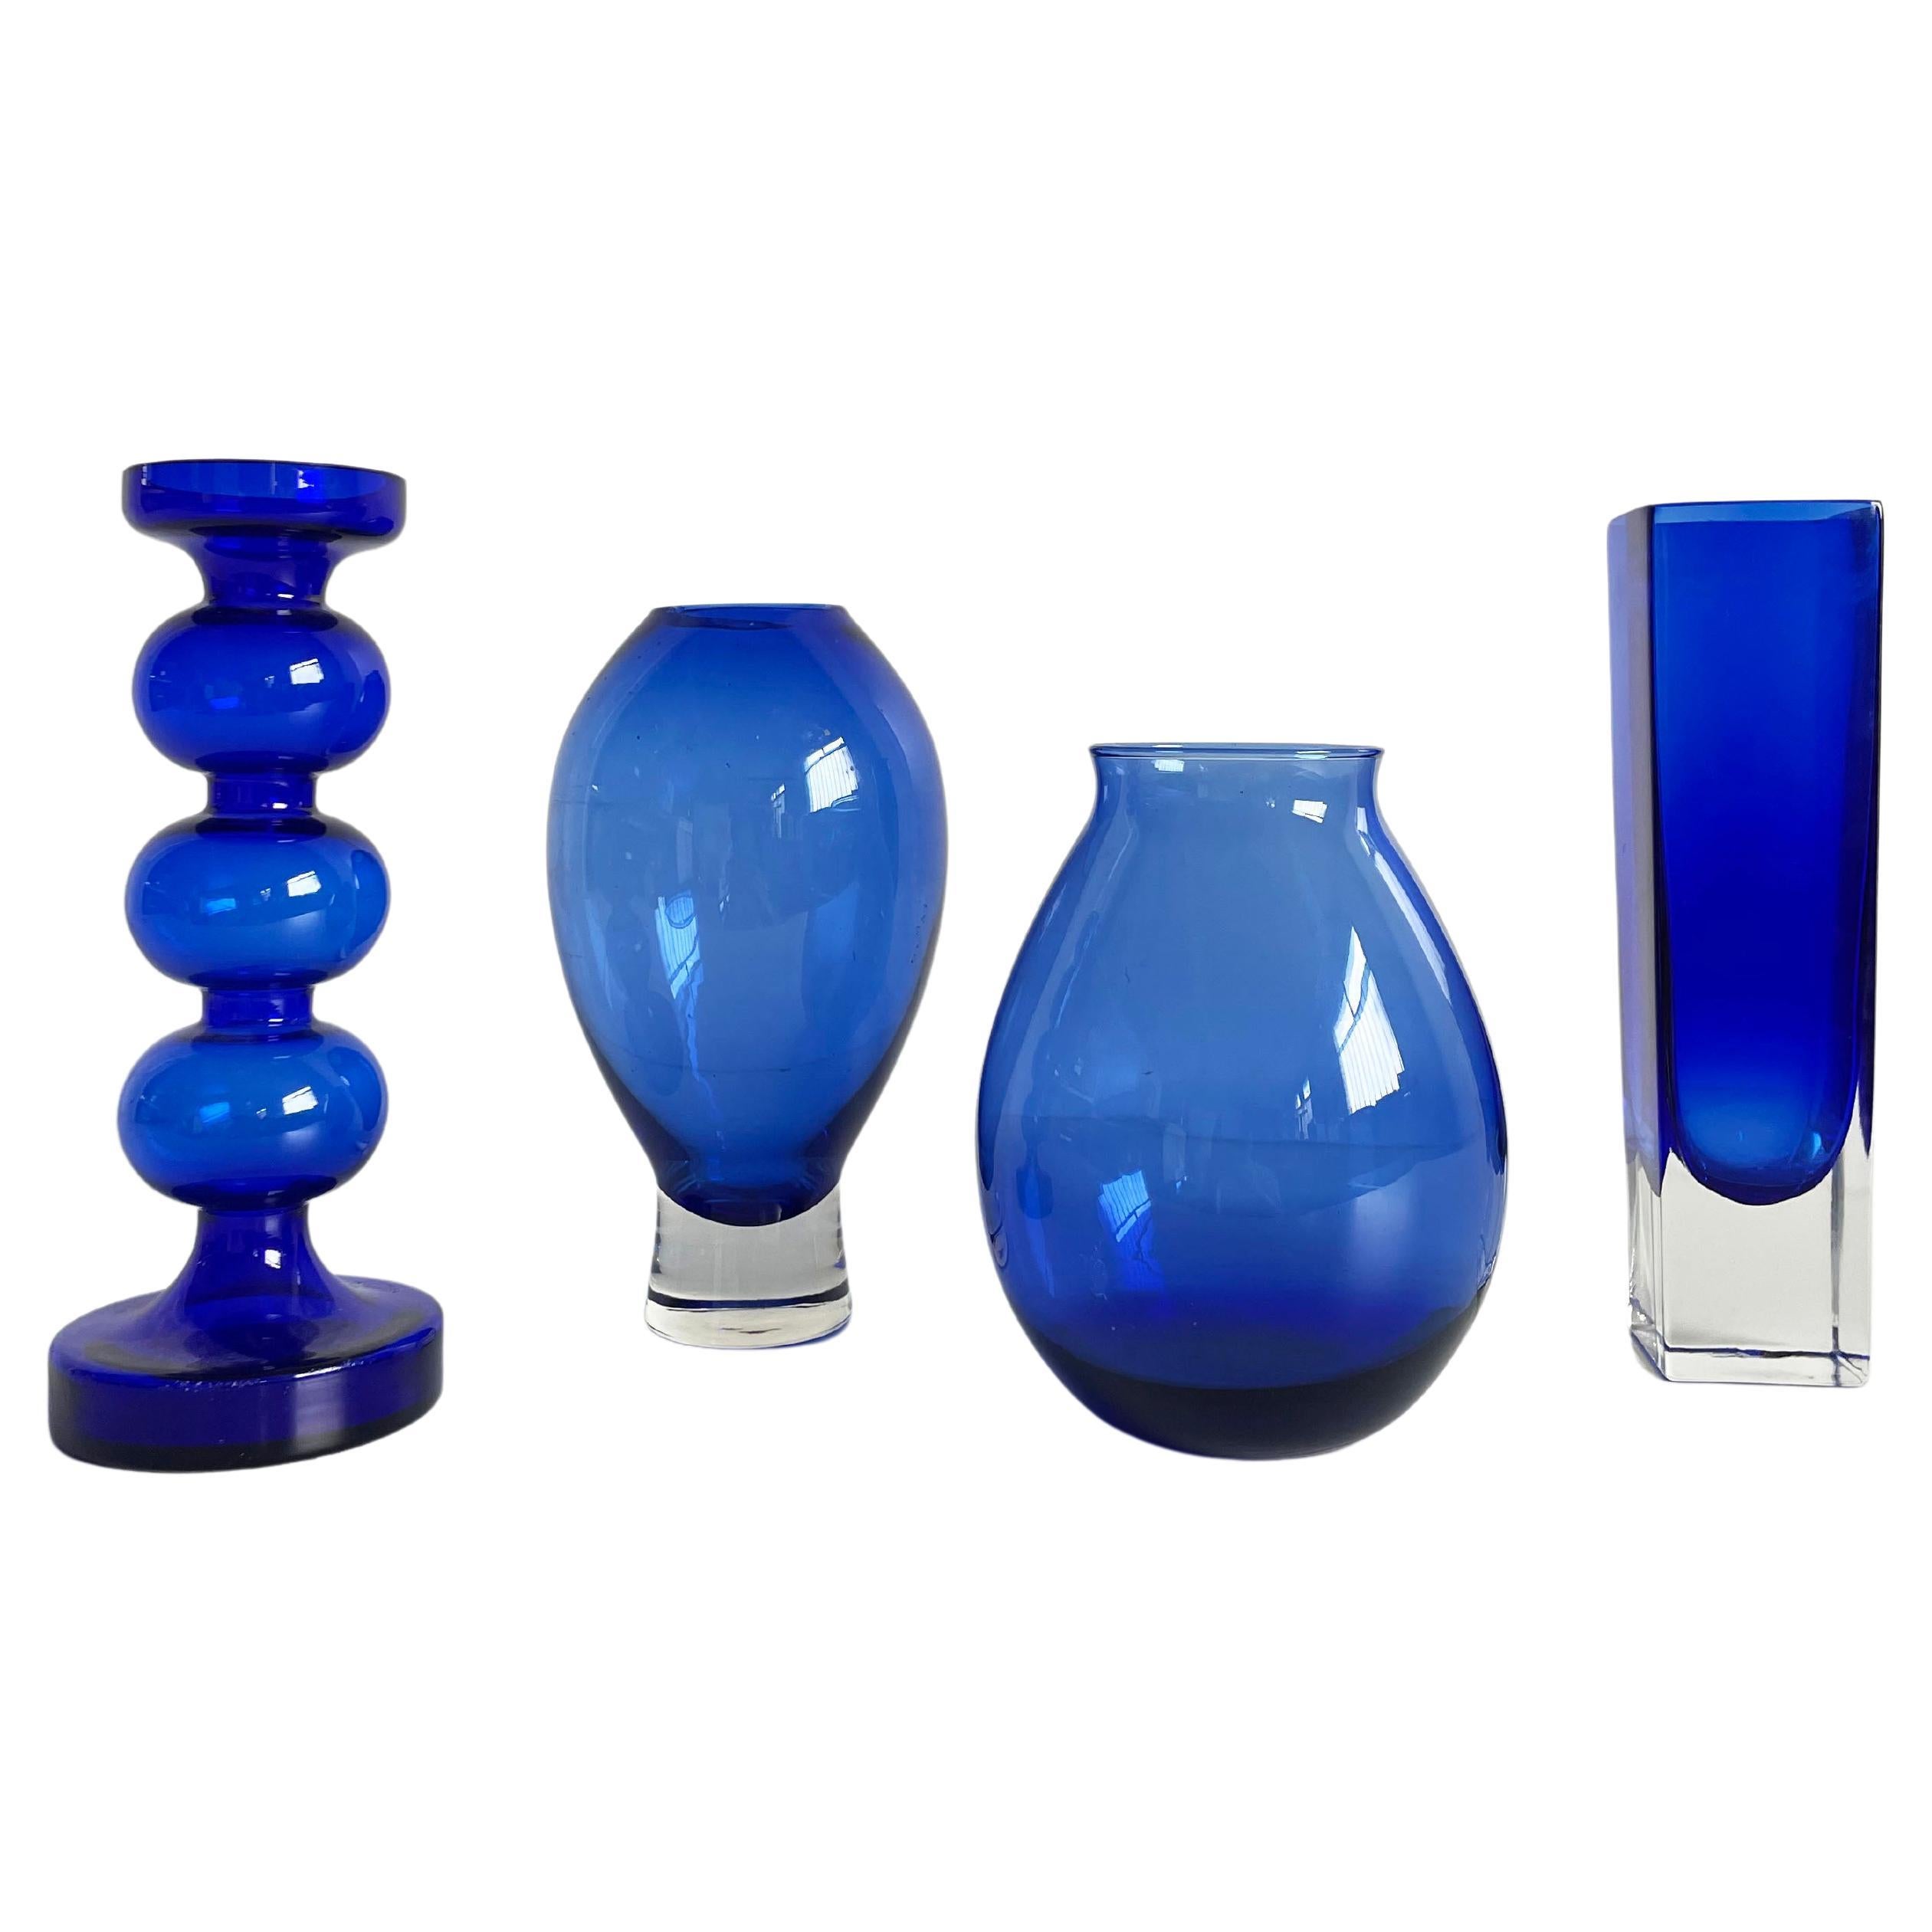 Collection of Scandinavian Art Glass, Set of 4 diverse Blue Glass Vases